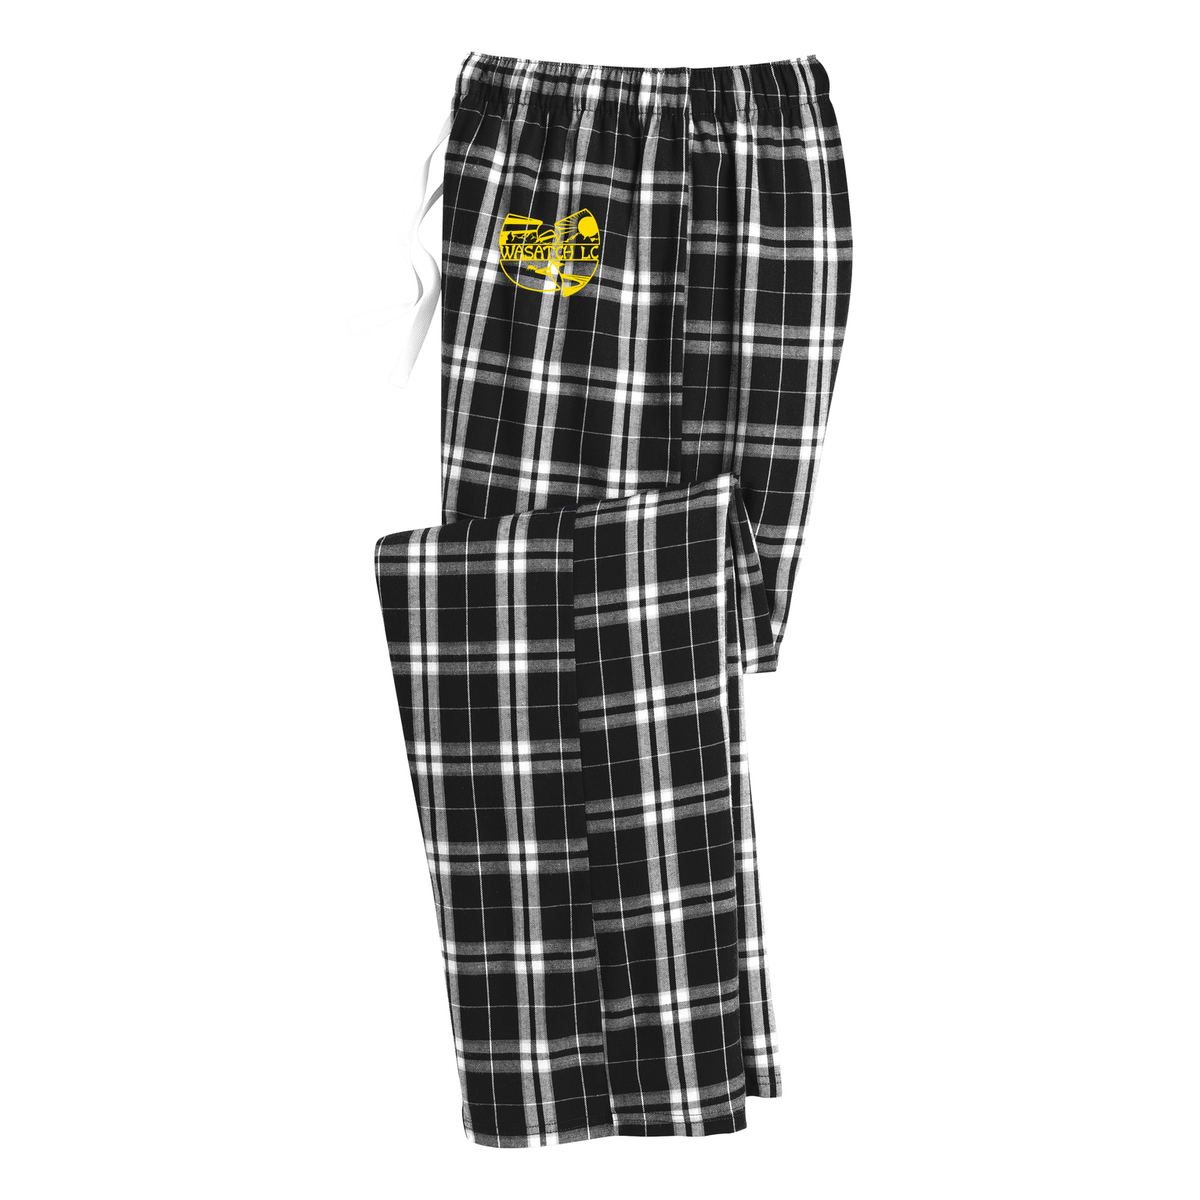 Wasatch LC Plaid Pajama Pants